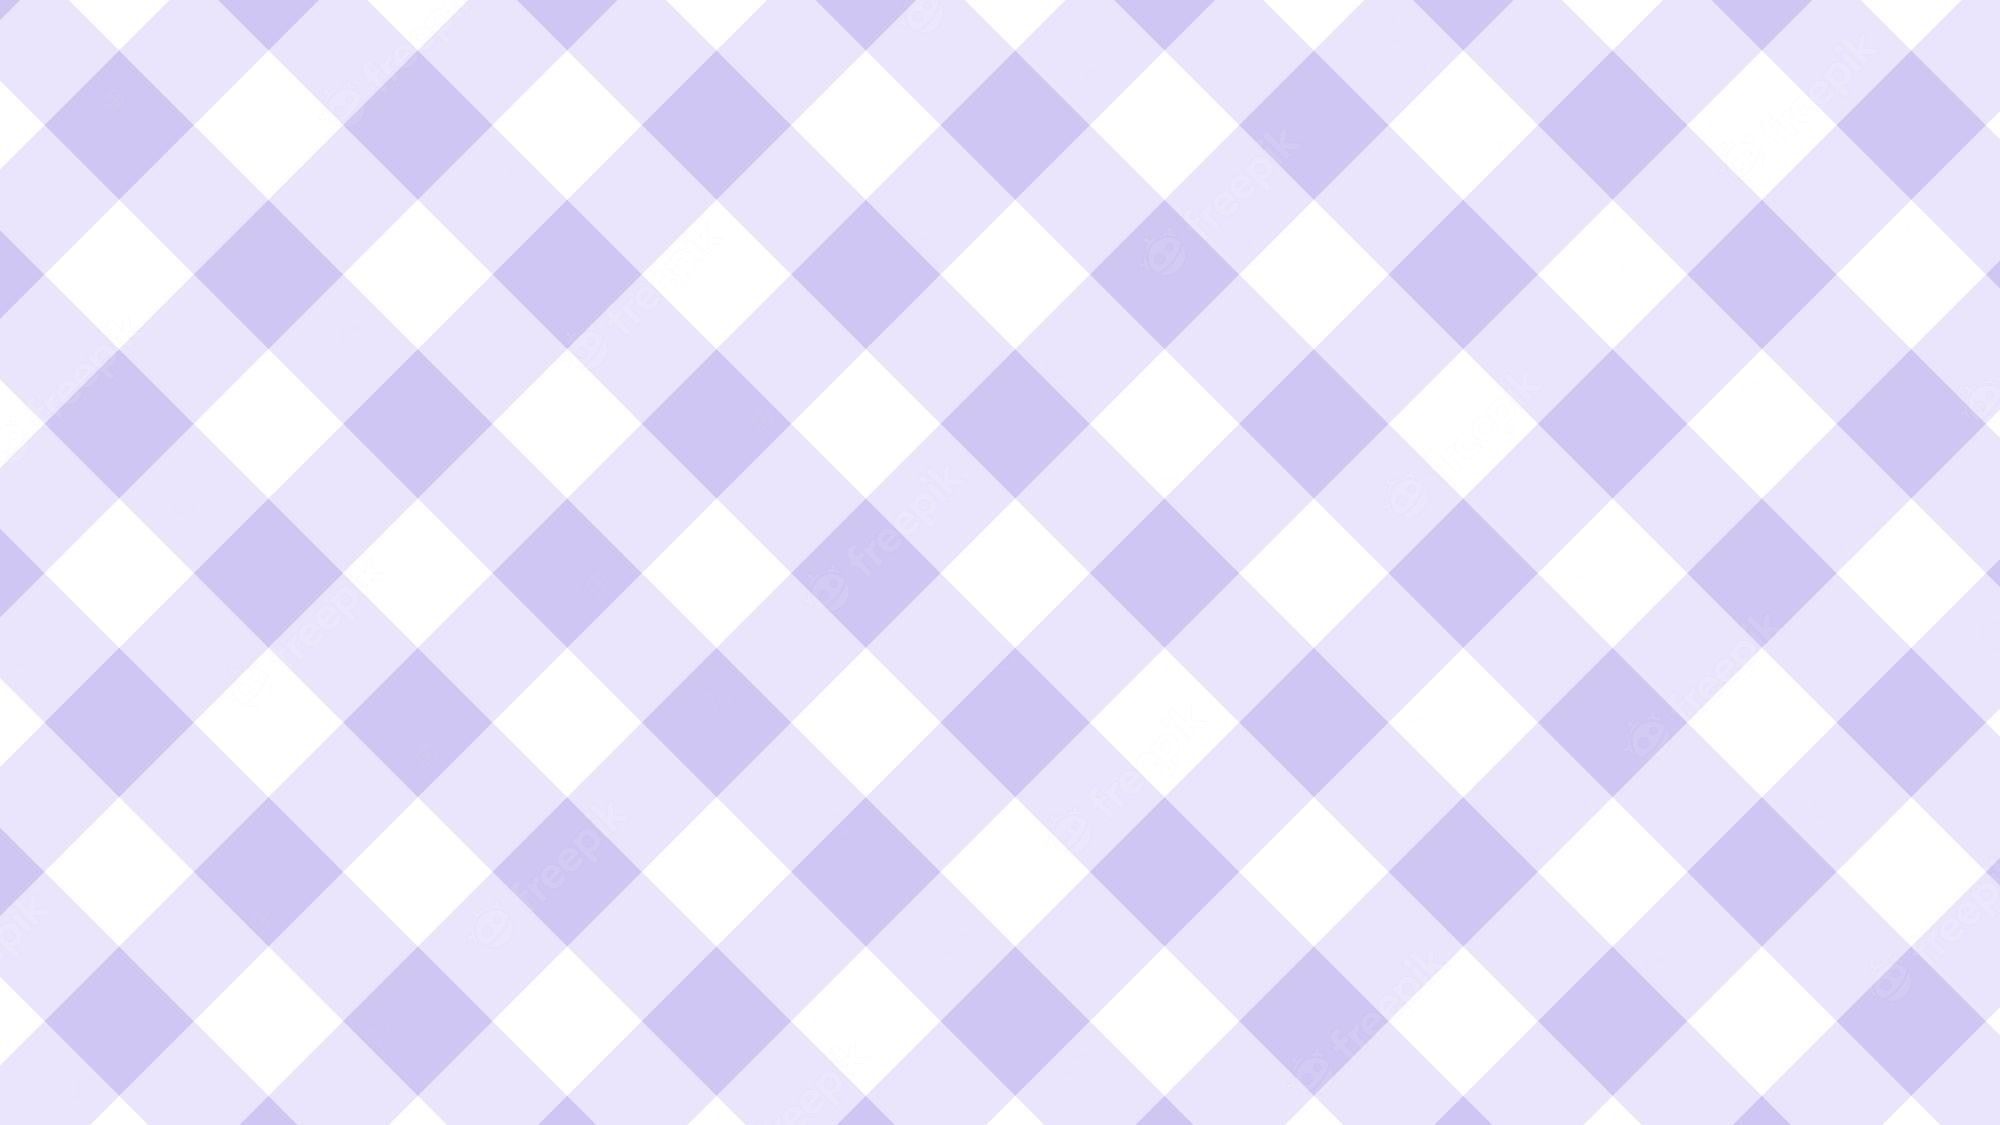 A purple and white checkered pattern - Pastel purple, light purple